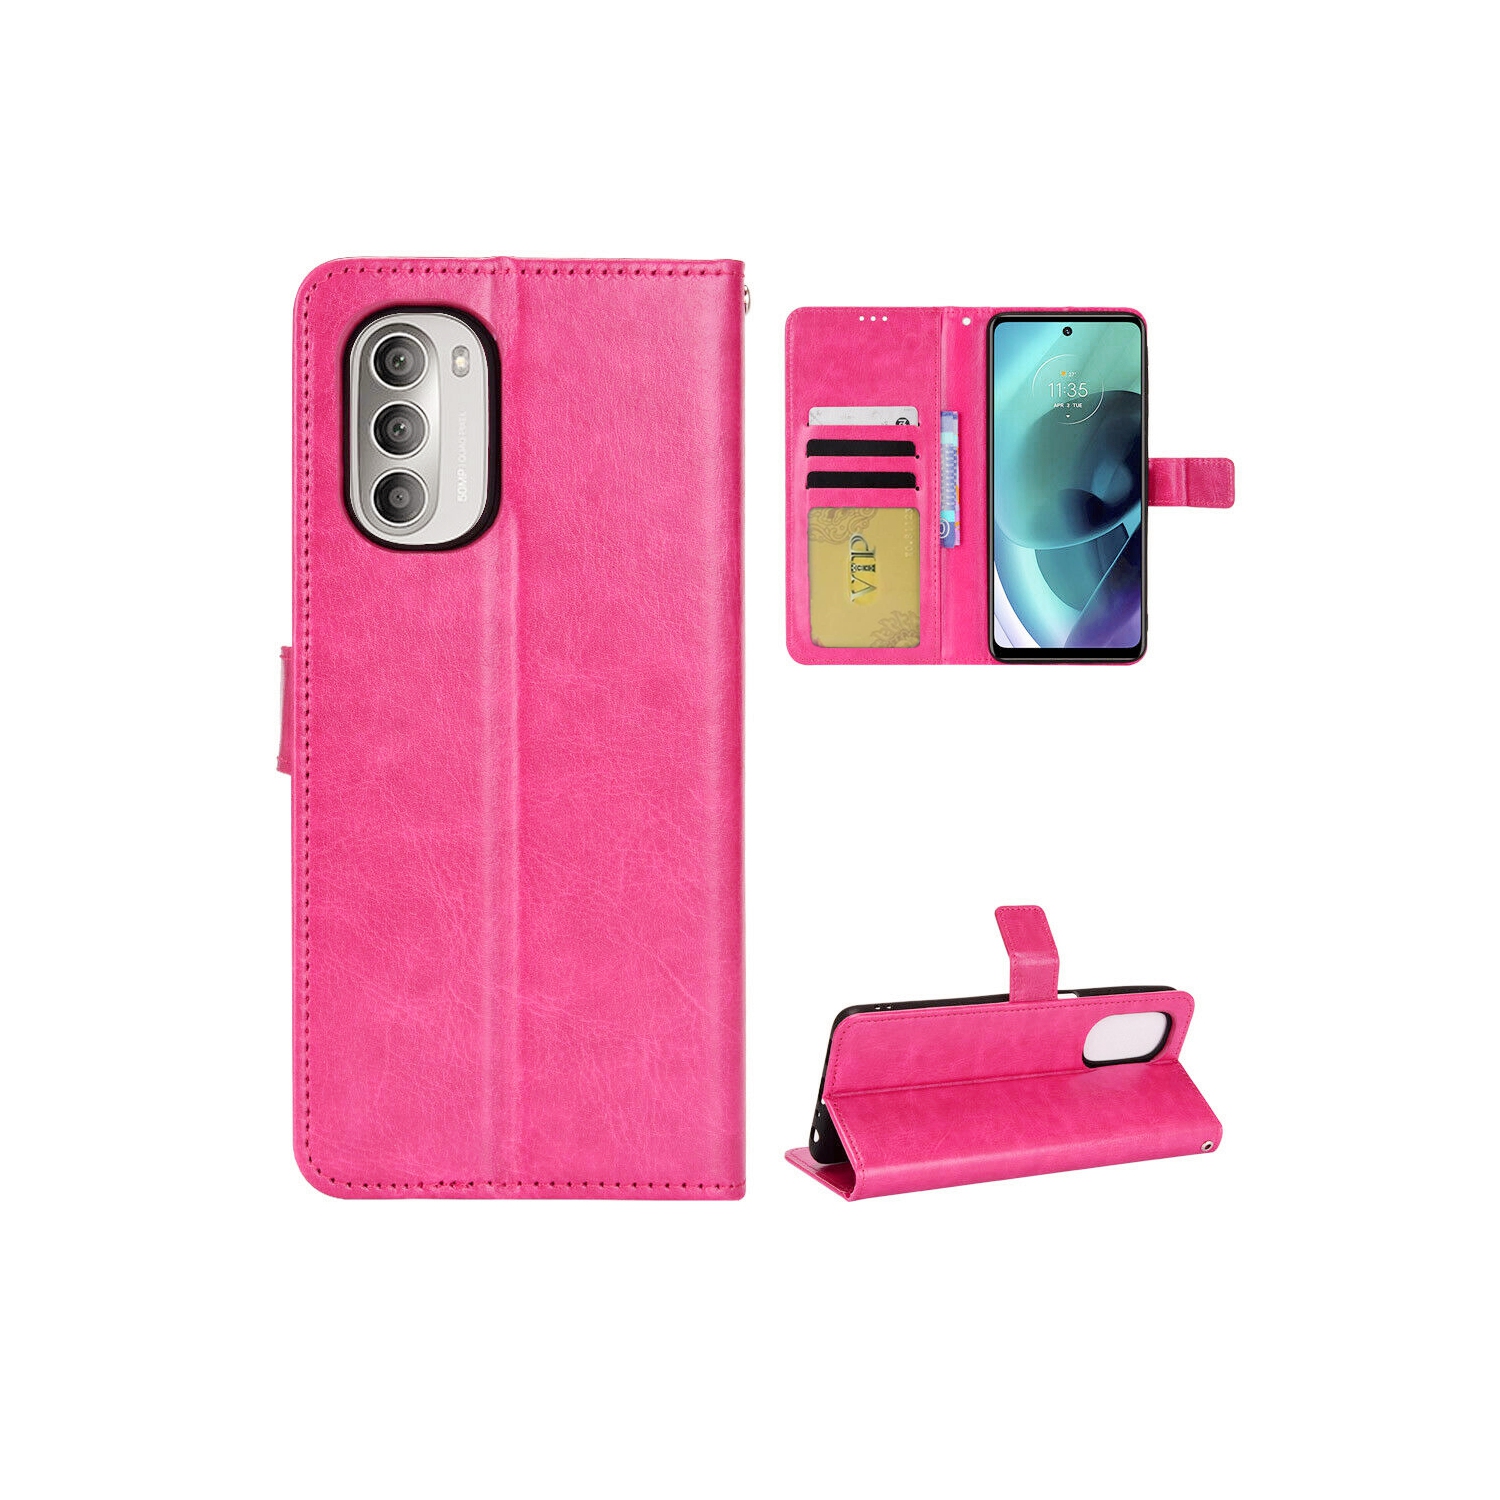 [CS] Motorola Moto G Stylus 5G 2022 Case, Magnetic Leather Folio Wallet Flip Case Cover with Card Slot, Hot Pink